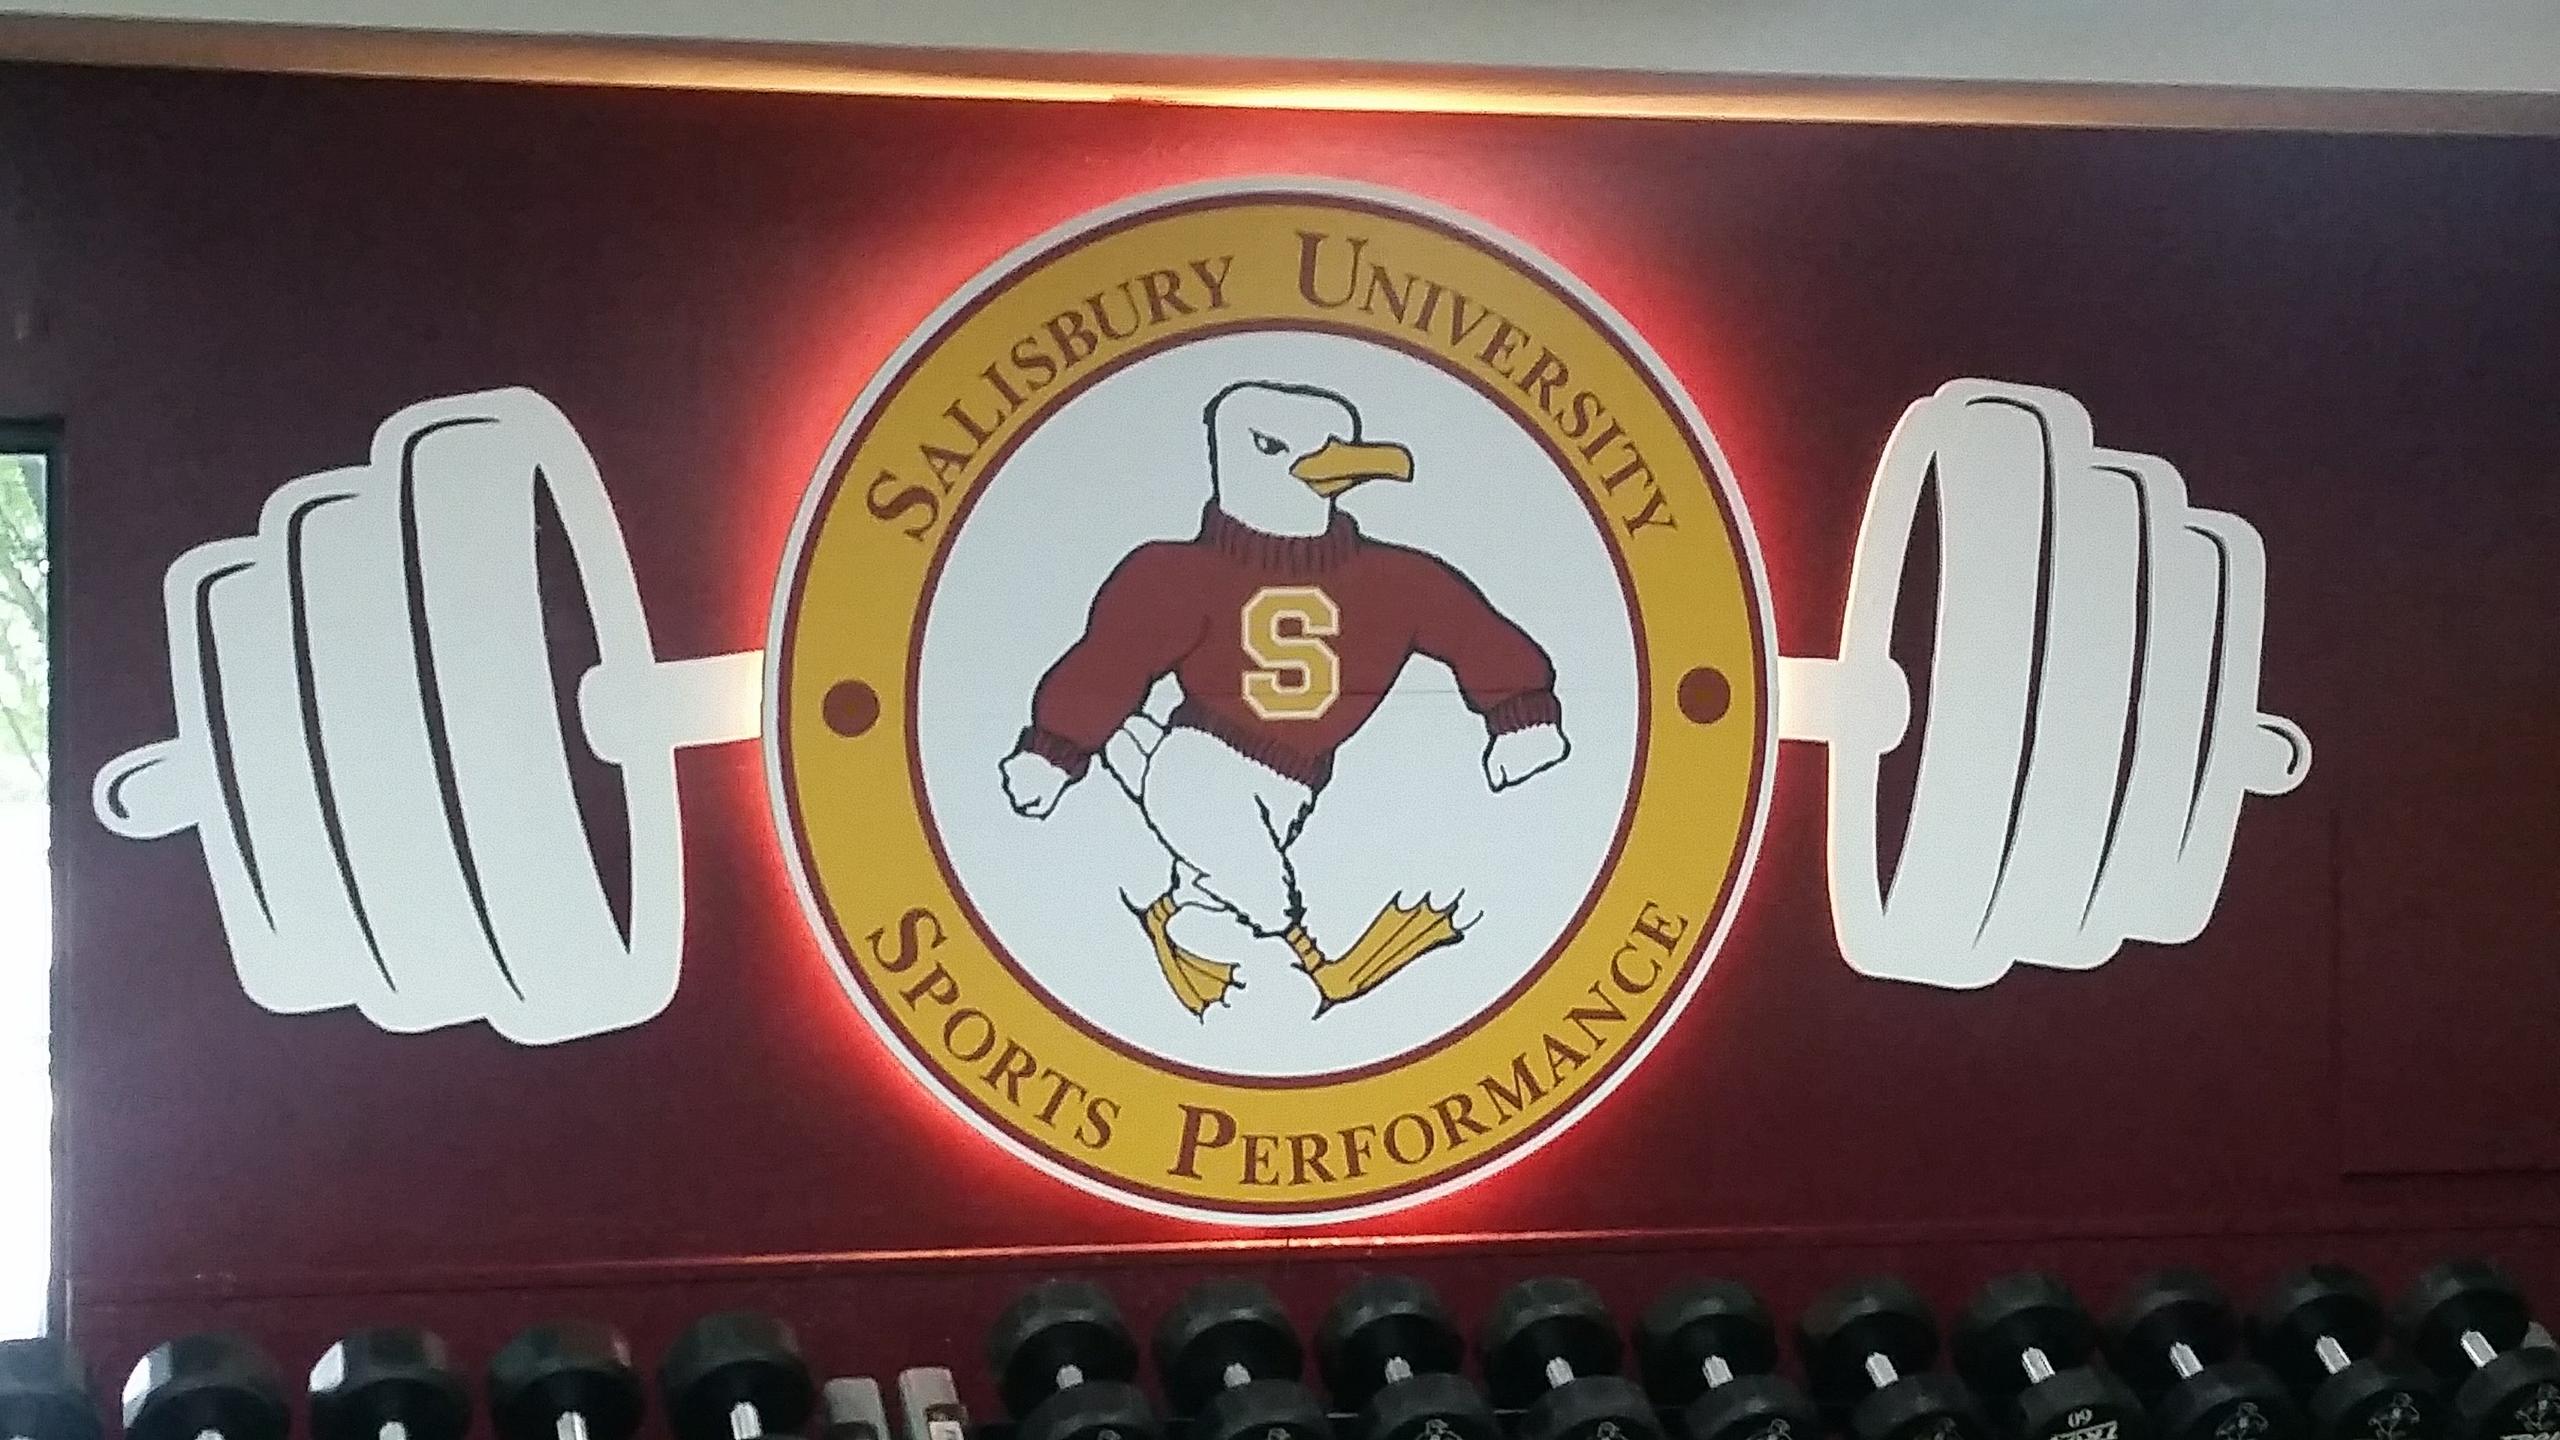 Salisbury University Sports Performance logo